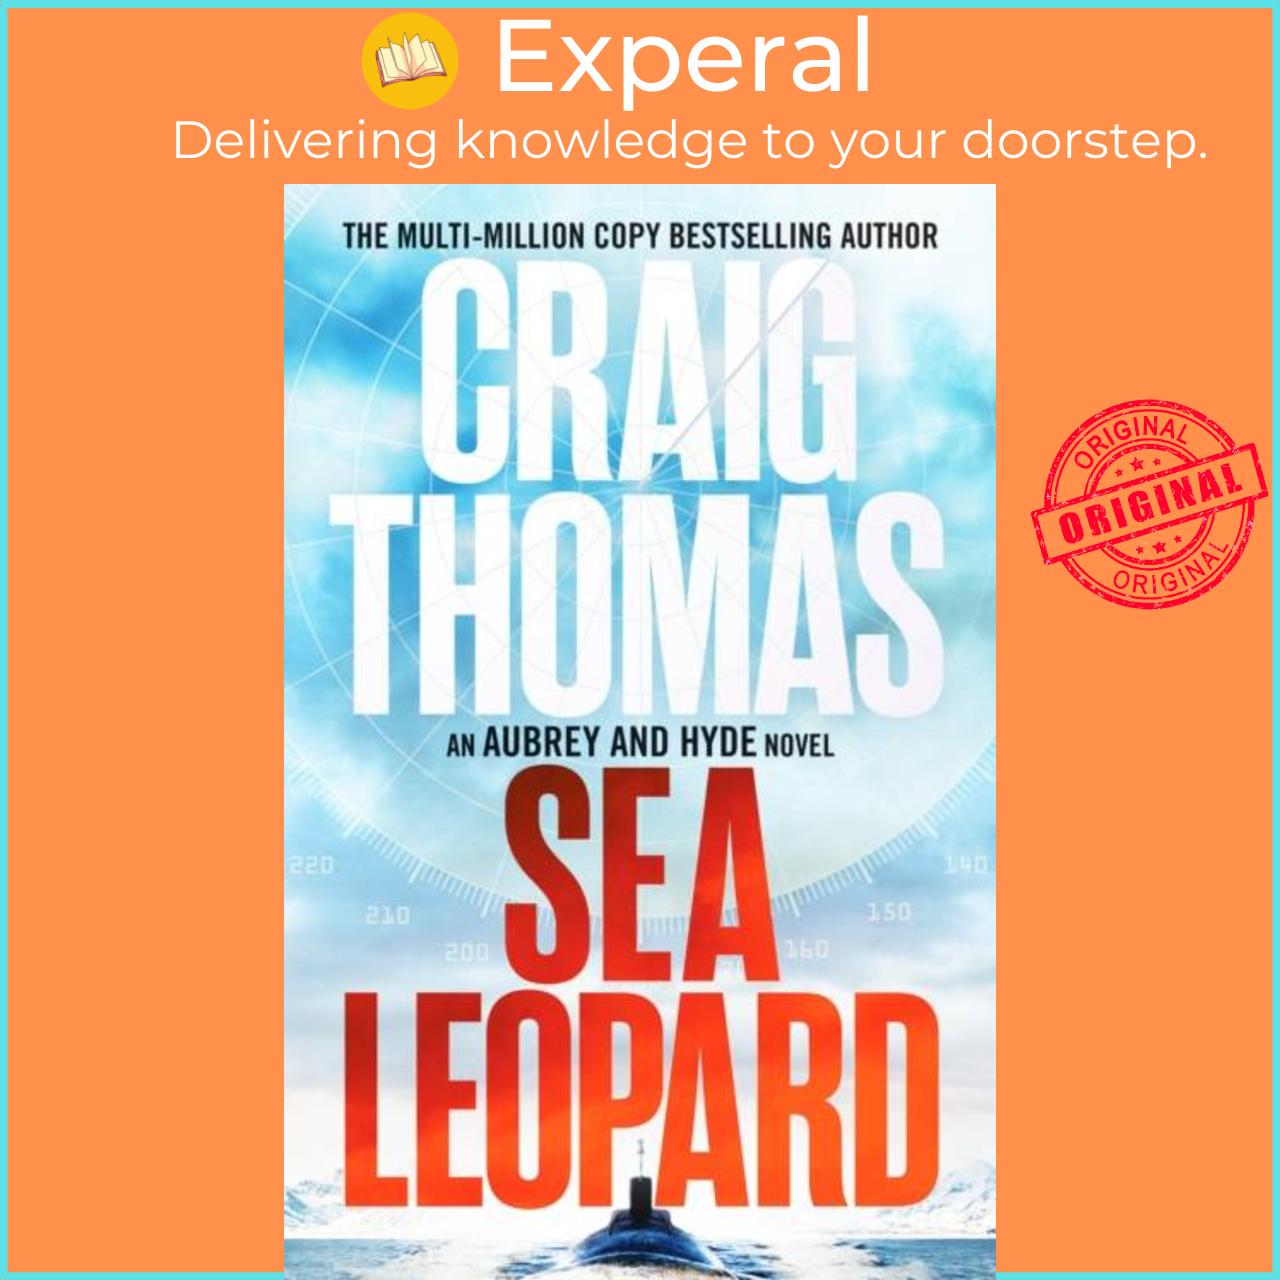 Sách - Sea Leopard by Craig Thomas (UK edition, paperback)